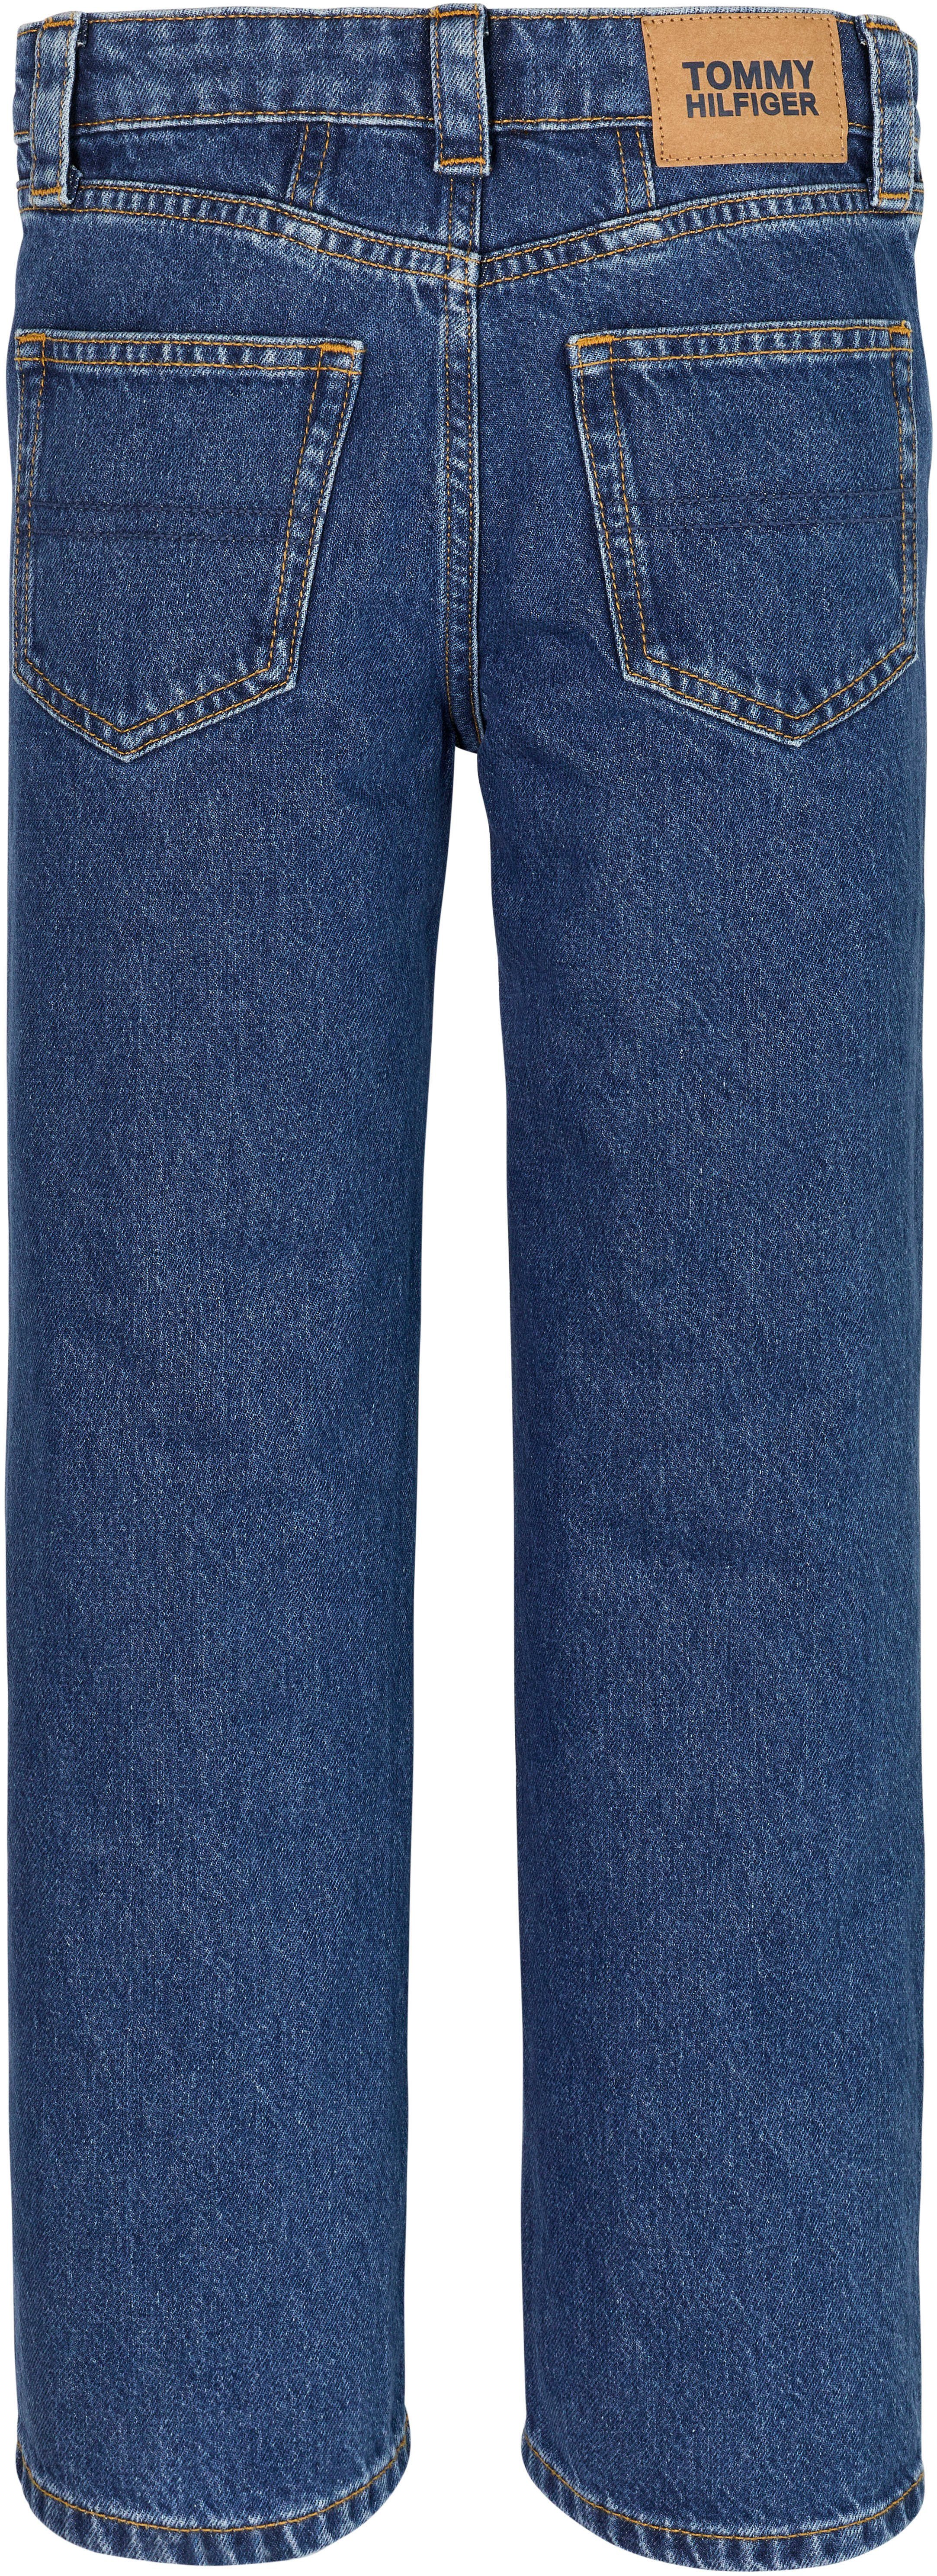 Junior Tommy GIRLFRIEND Hilfiger 5-Pocket-Jeans BLUE Bund Kinder Kids Leder-Brandlabel MID hinteren am MiniMe,mit